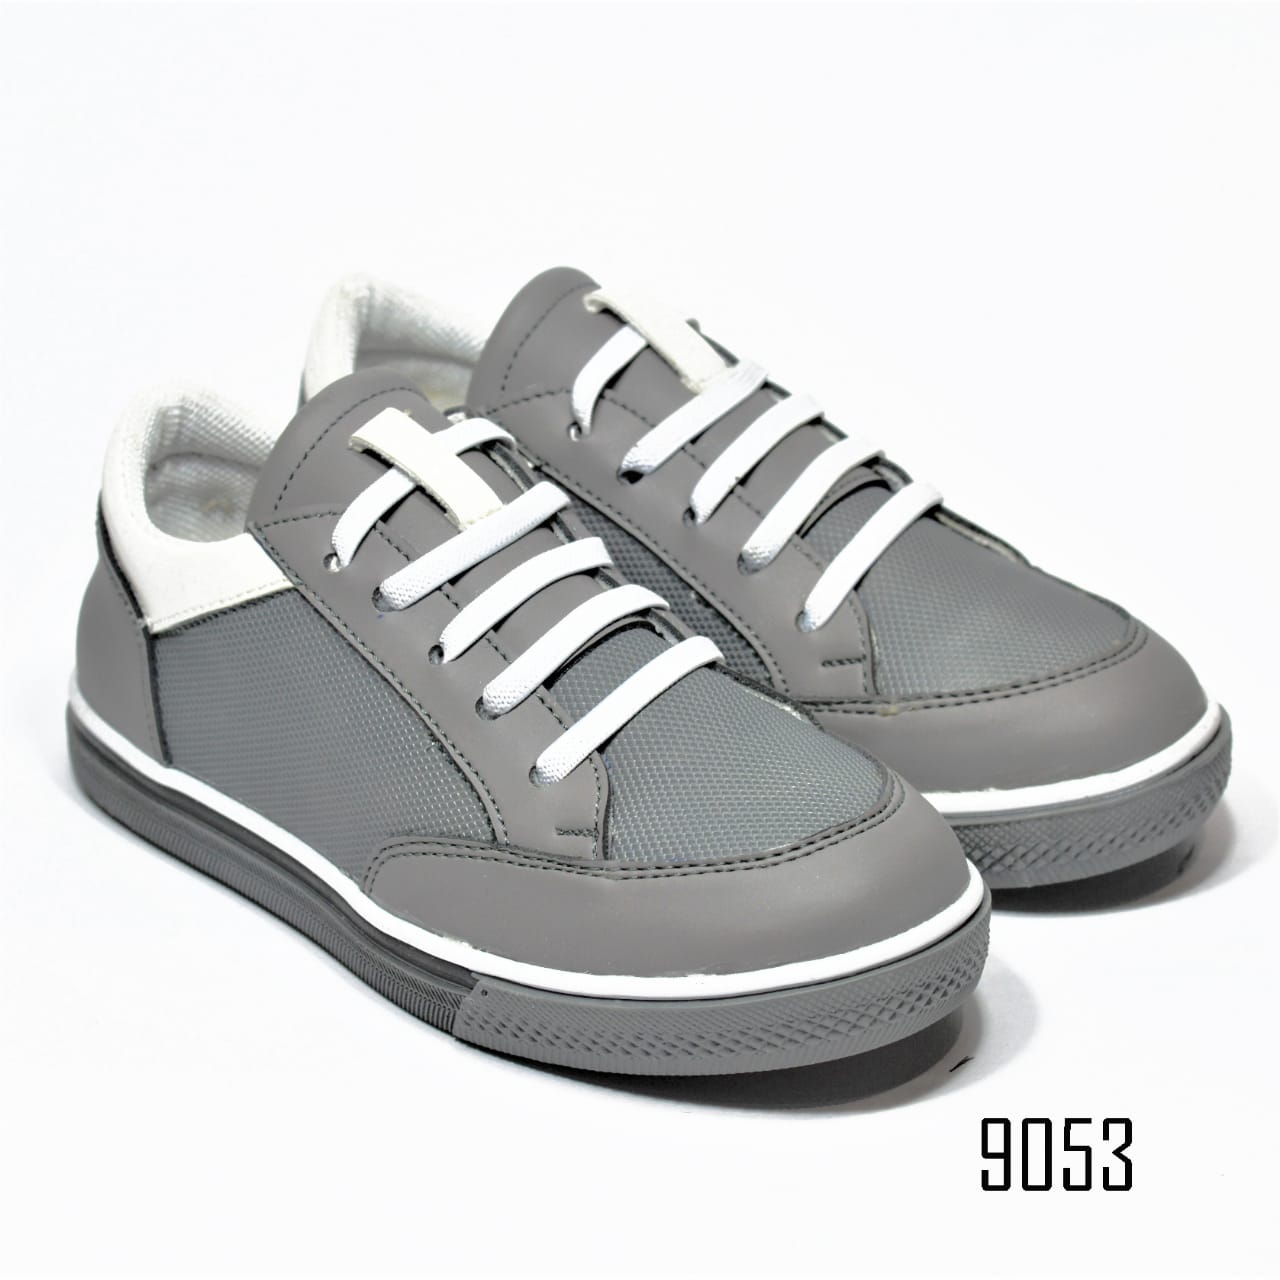 Belline Sneakers For Kids -9053